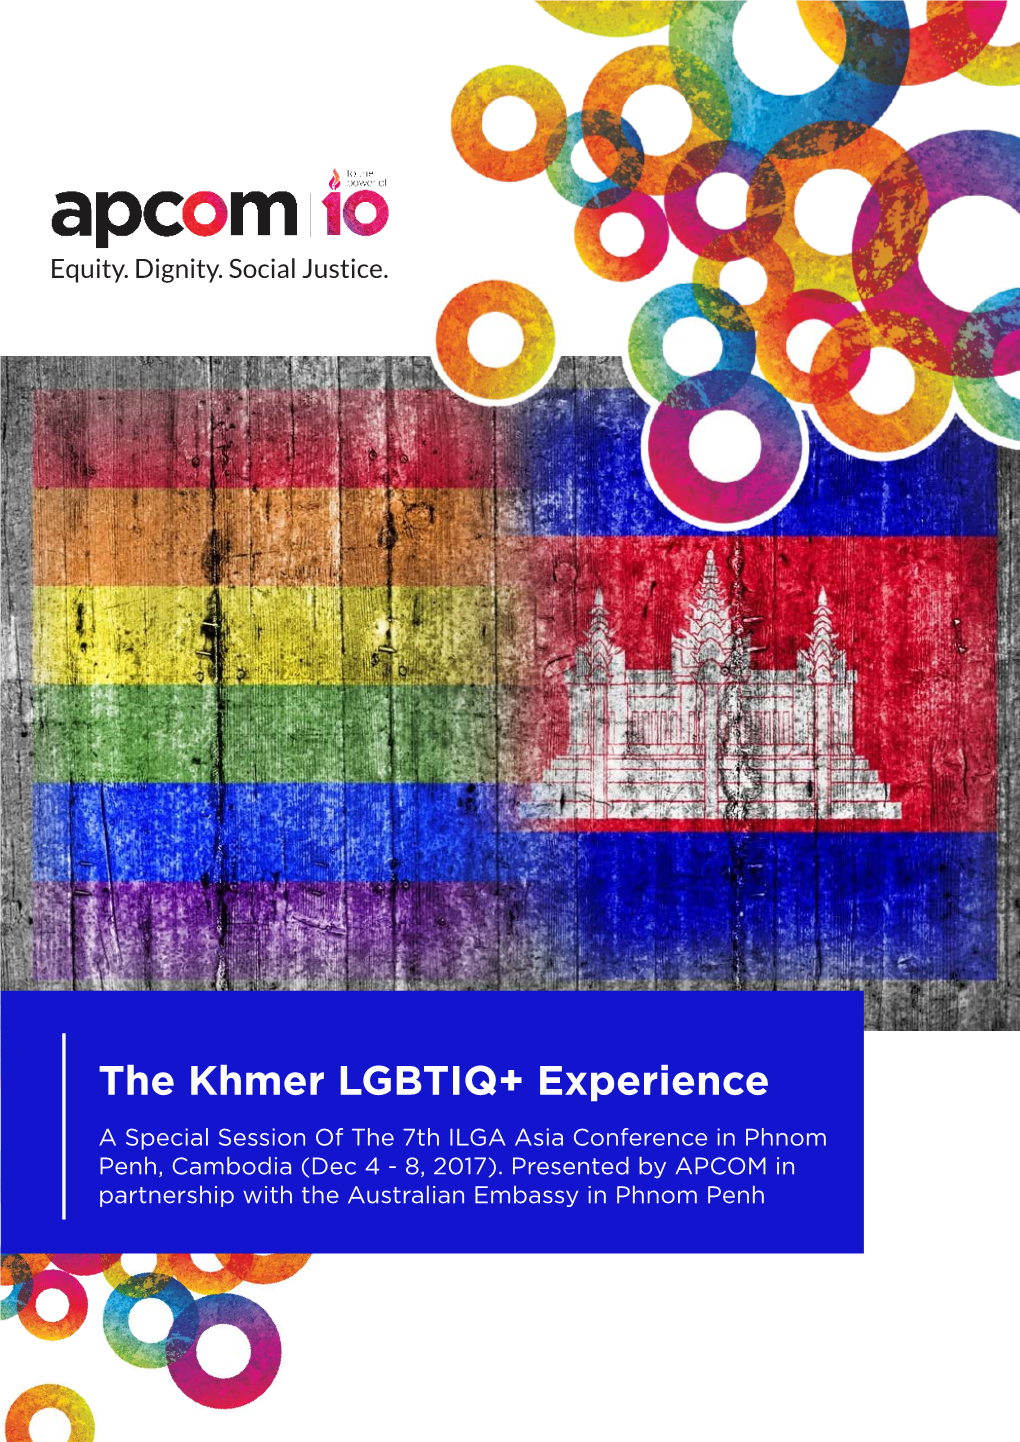 The Khmer LGBTIQ+ Experience a Special Session of the 7Th ILGA Asia Conference in Phnom Penh, Cambodia (Dec 4 - 8, 2017)